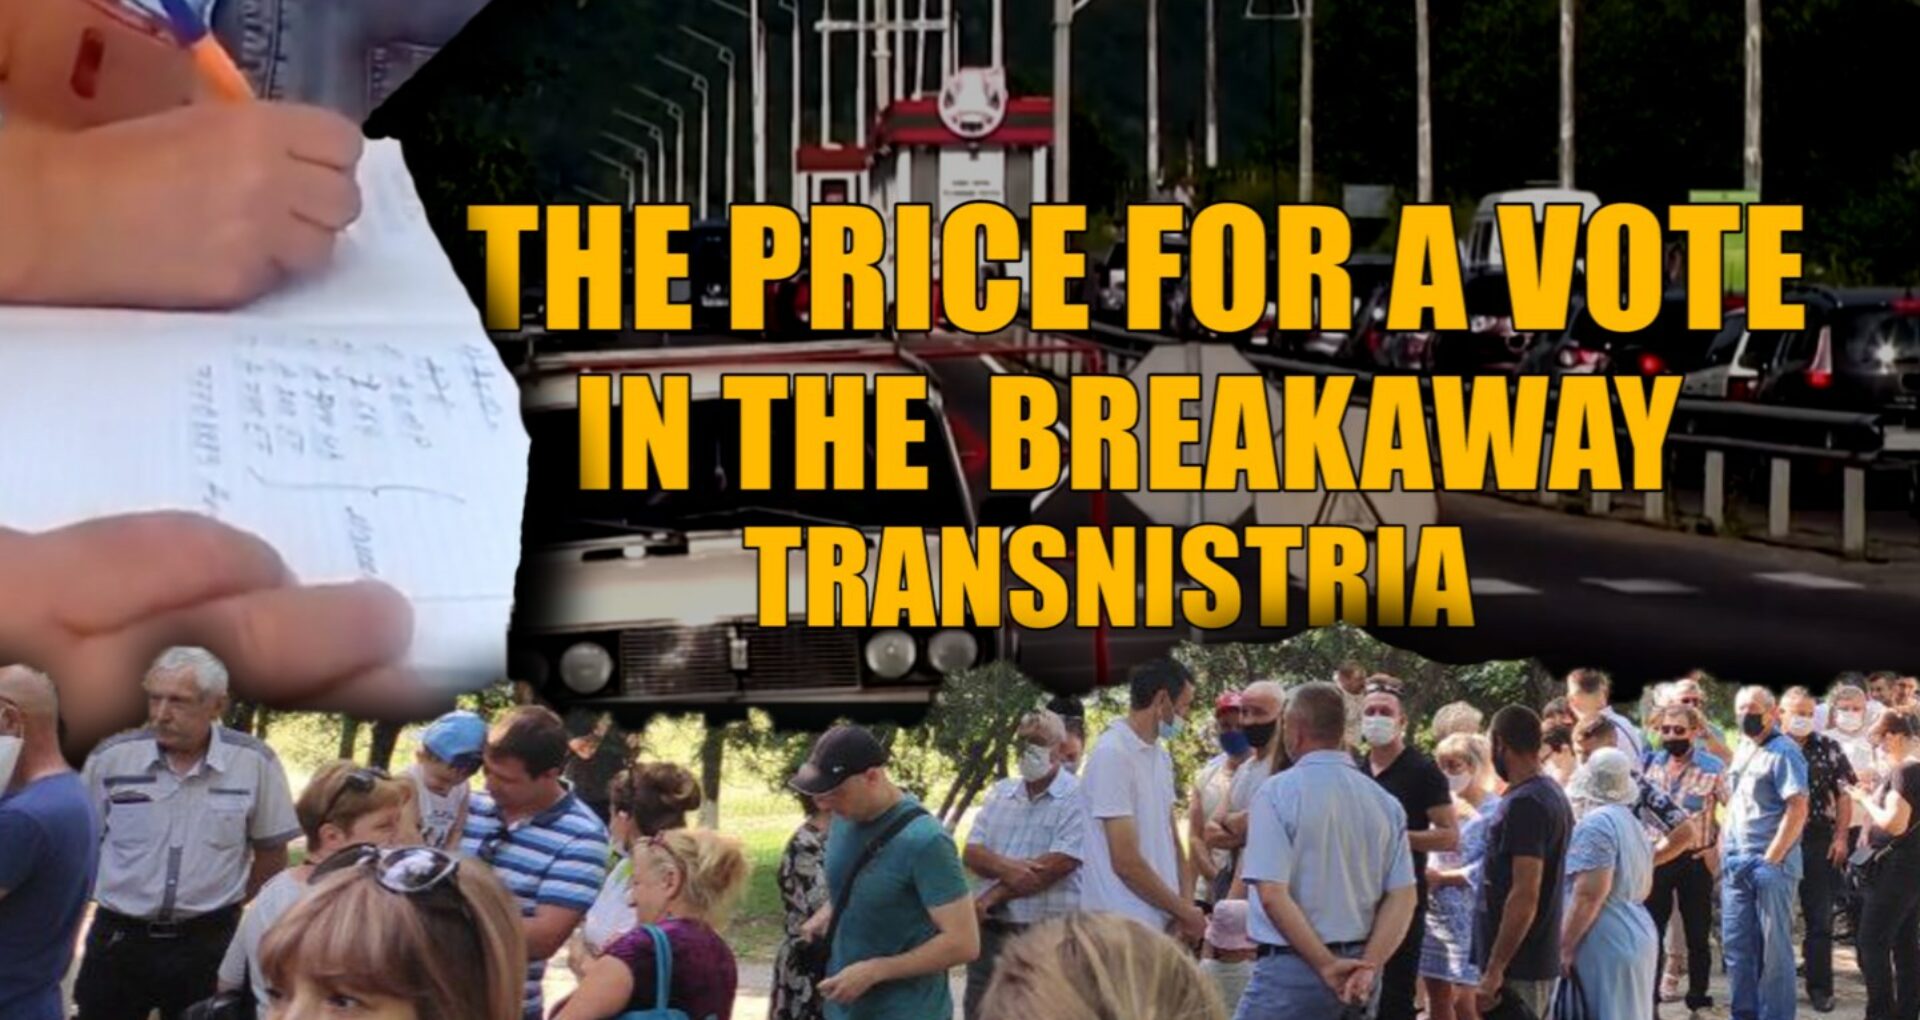 INVESTIGATION: The Price for a Vote in Breakaway Transnistria